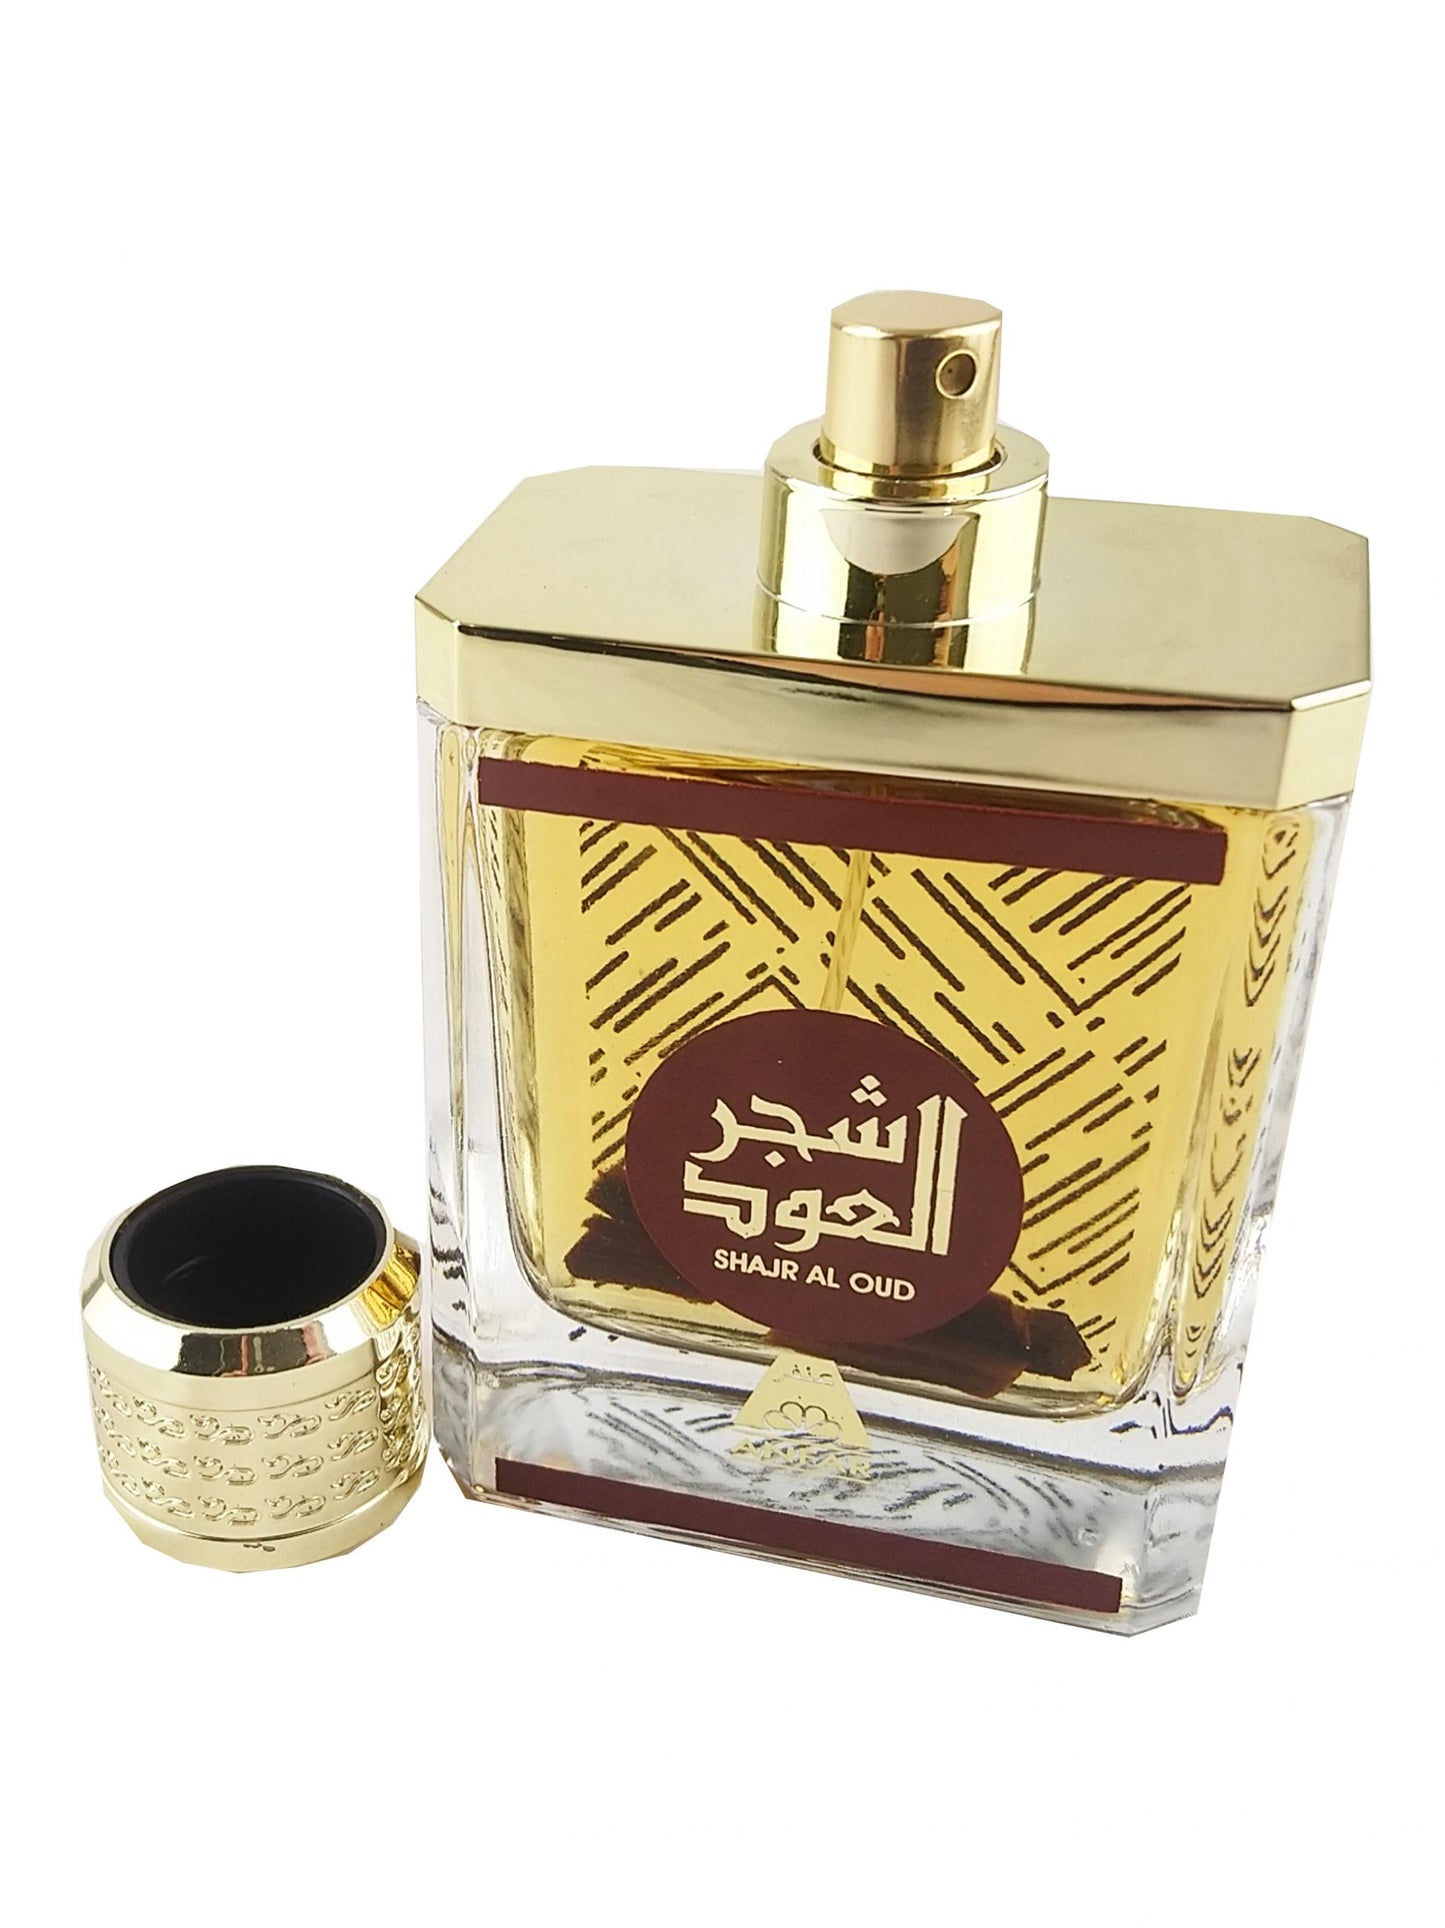 100 ml Eau de Perfume Shajr Al Oud Fragrância Almiscarada Amadeirada Leve Cítrica para Homem